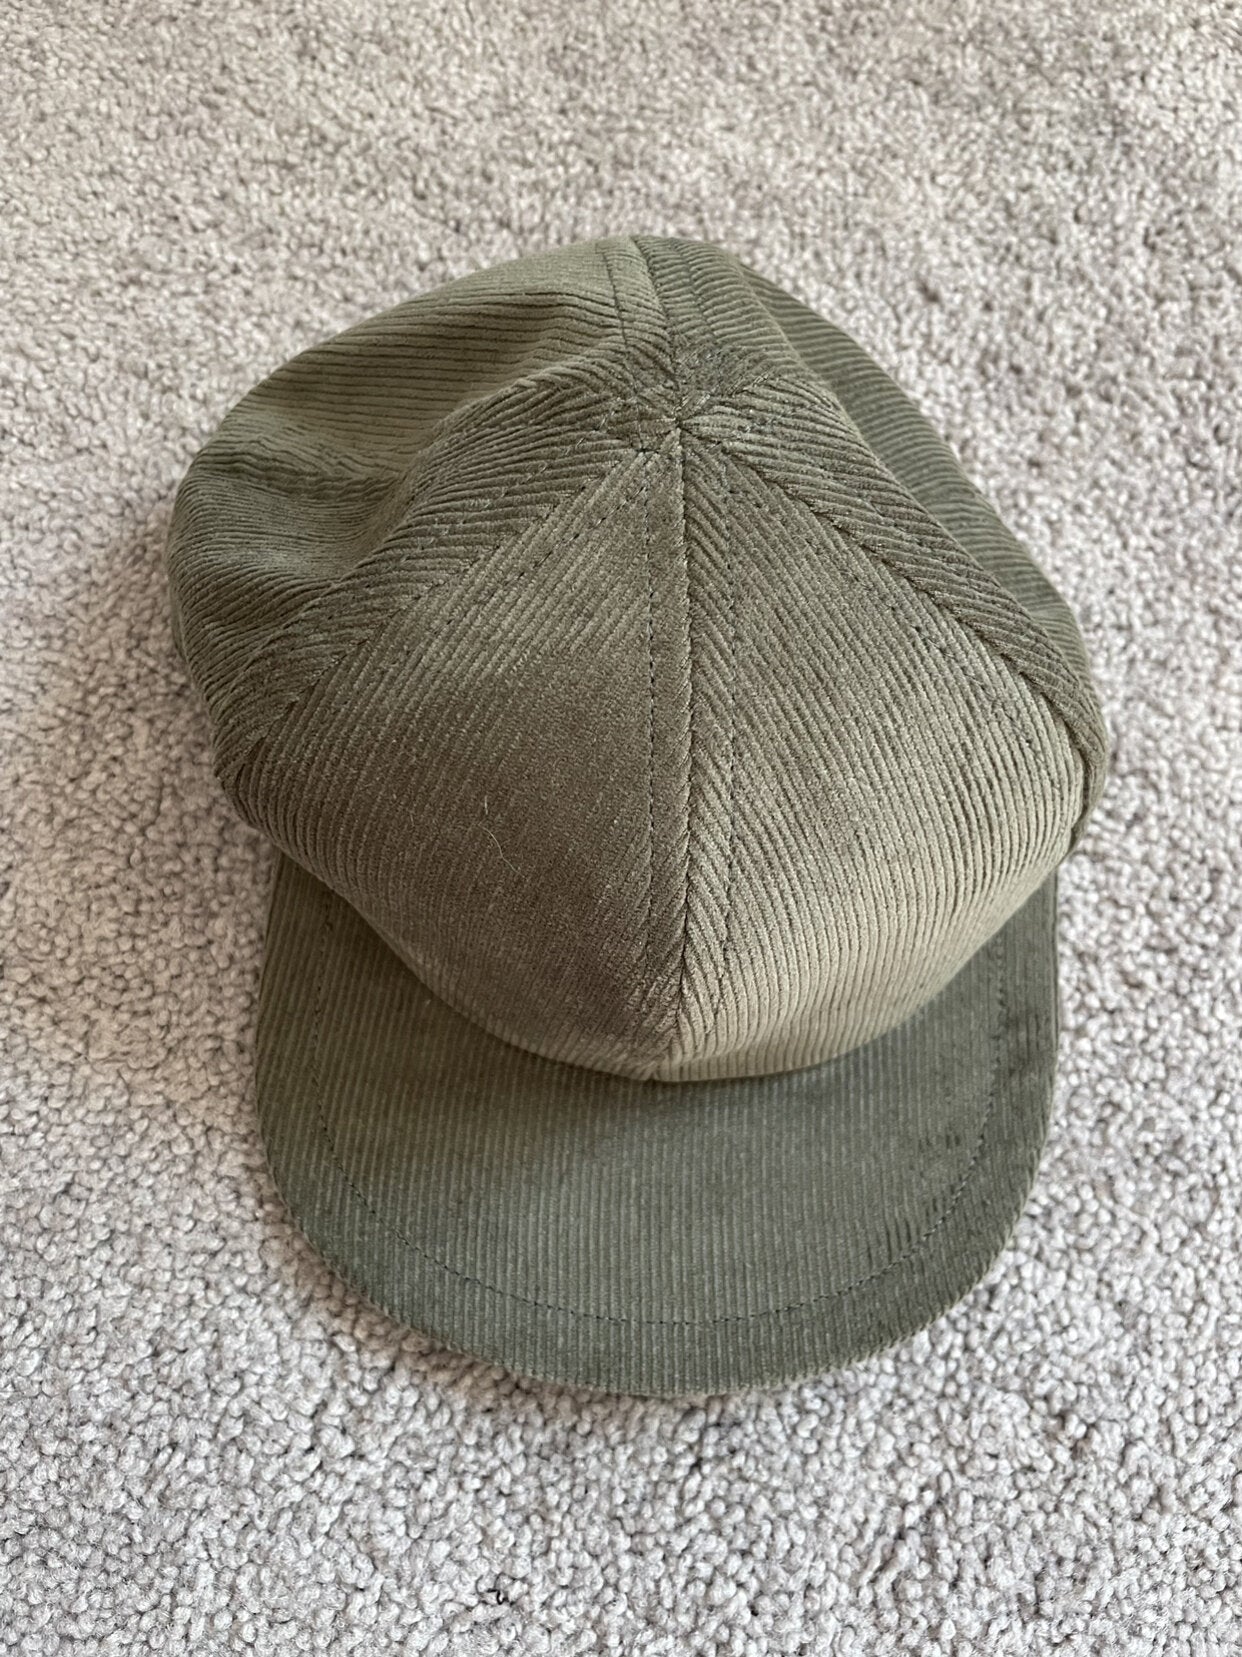 SALE - Olive Corduroy Trucker Hat